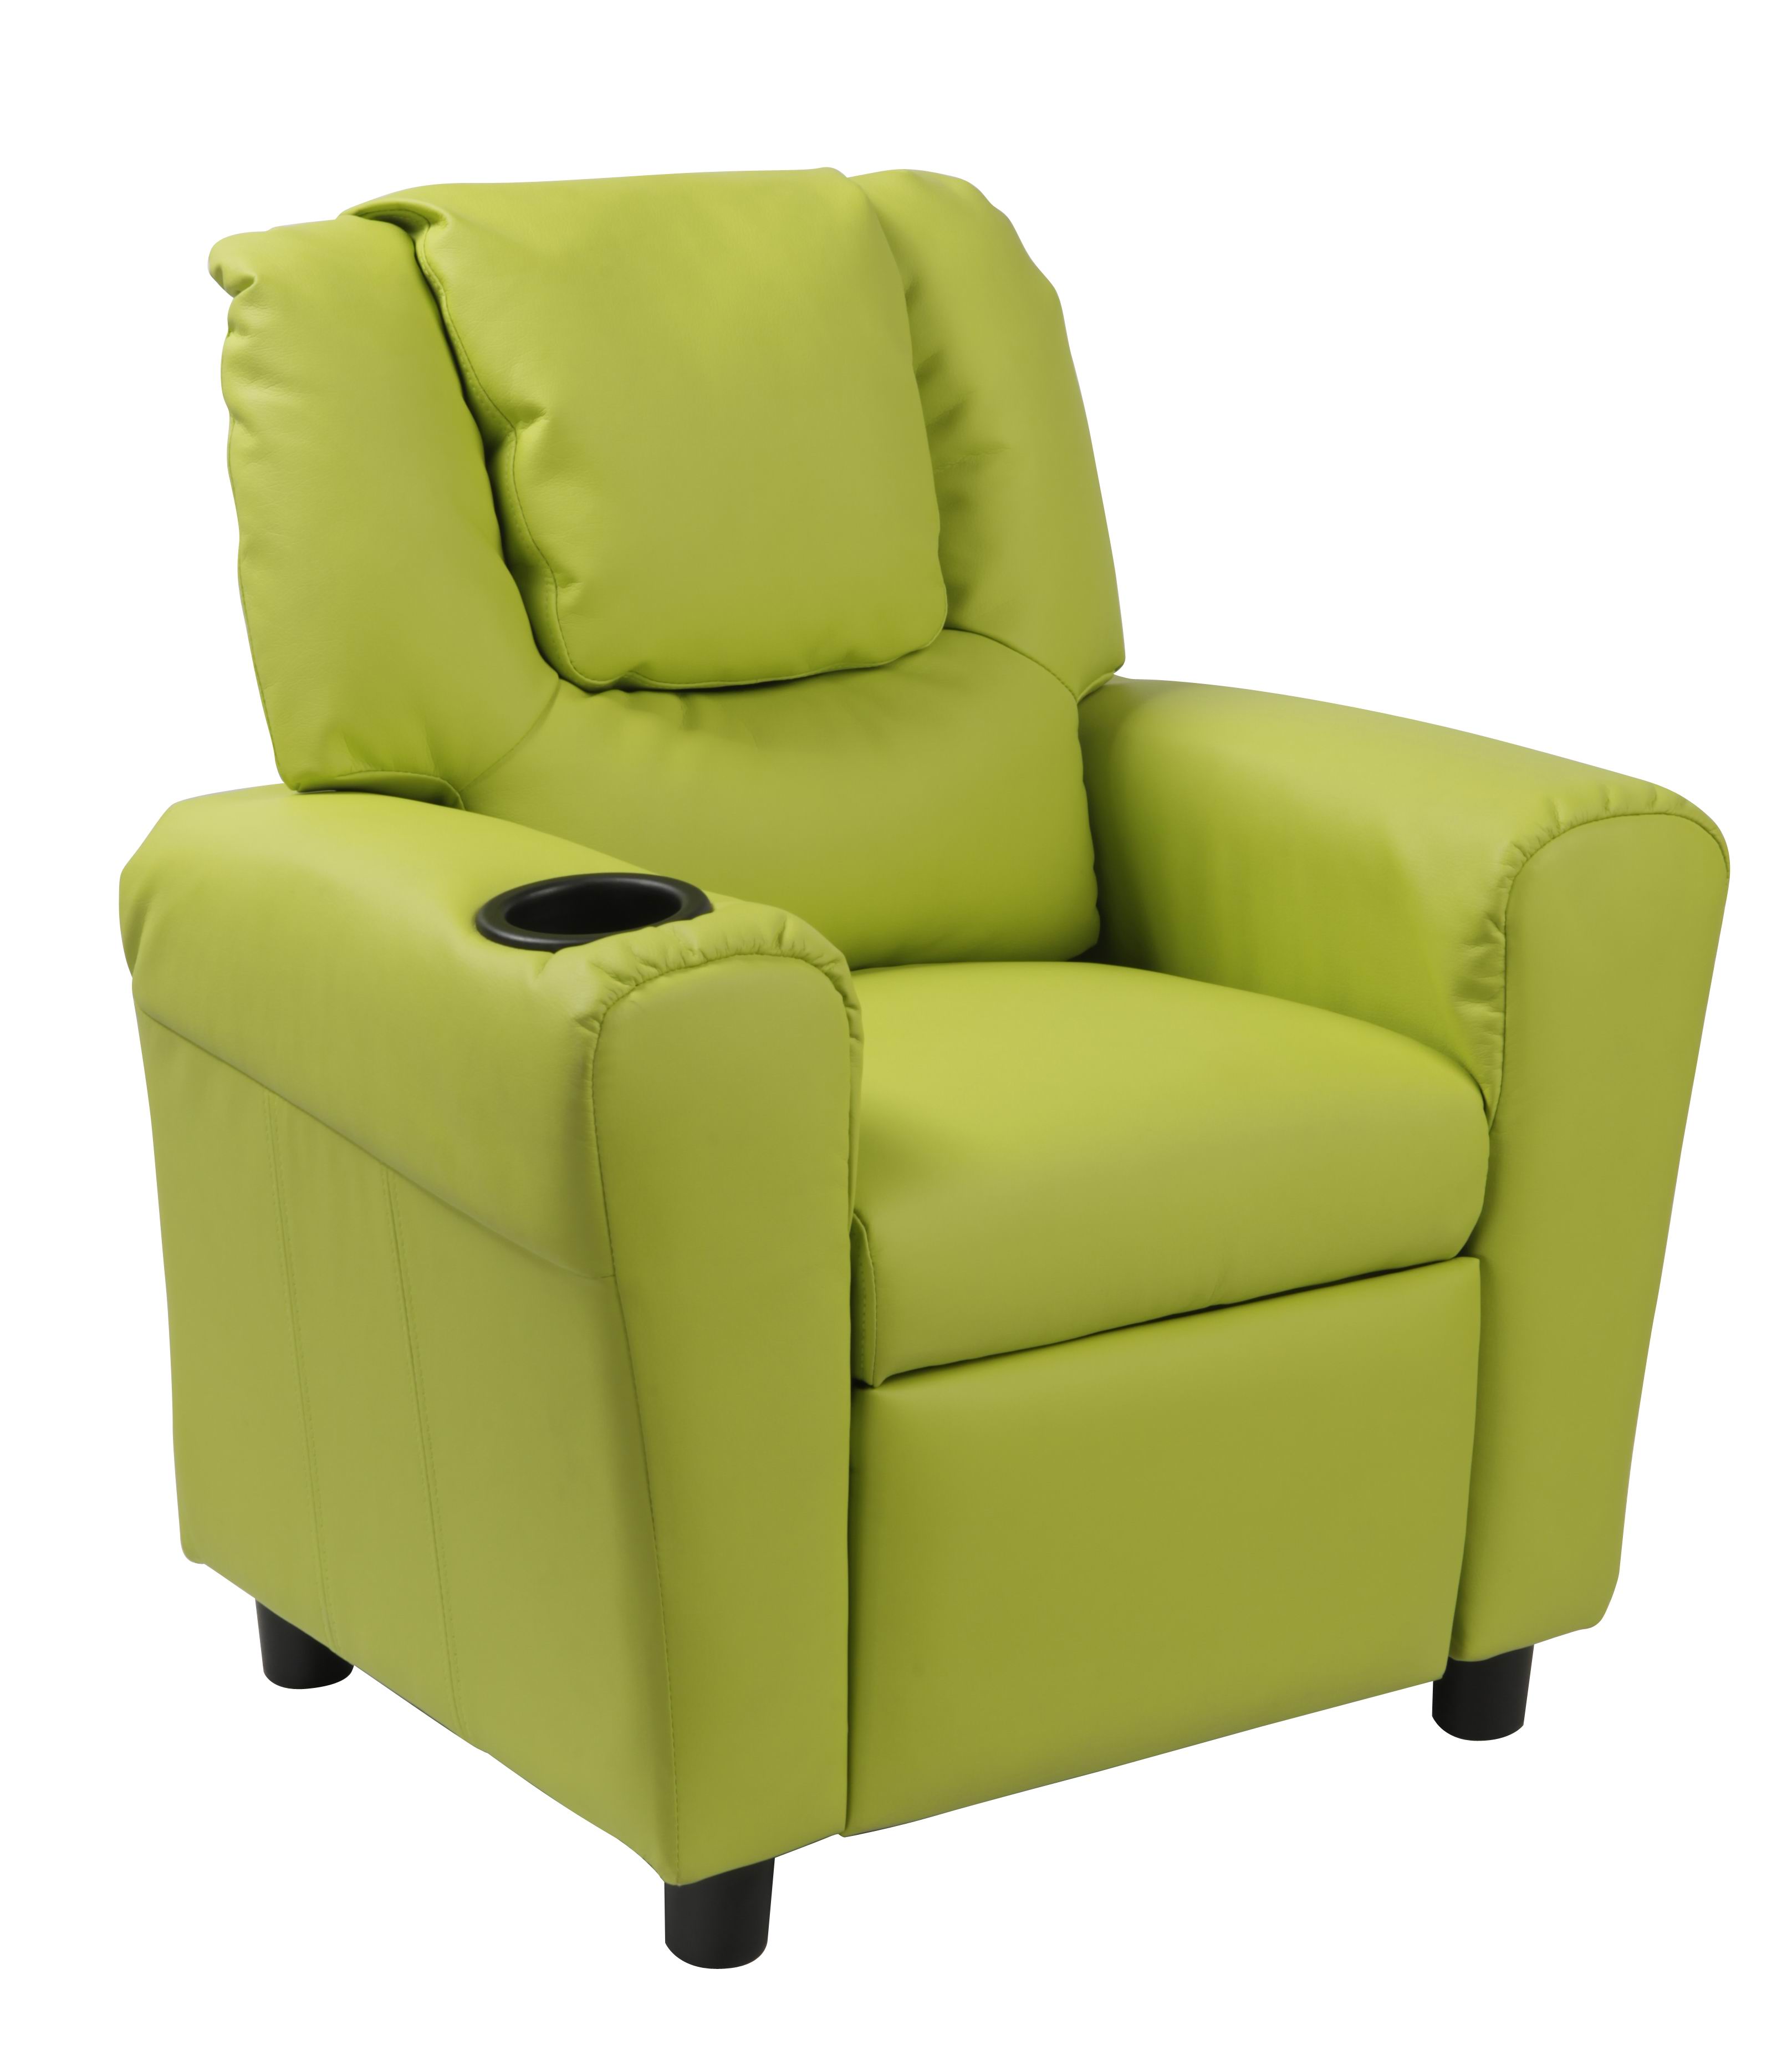 LD-2009 Green Leather Armchair